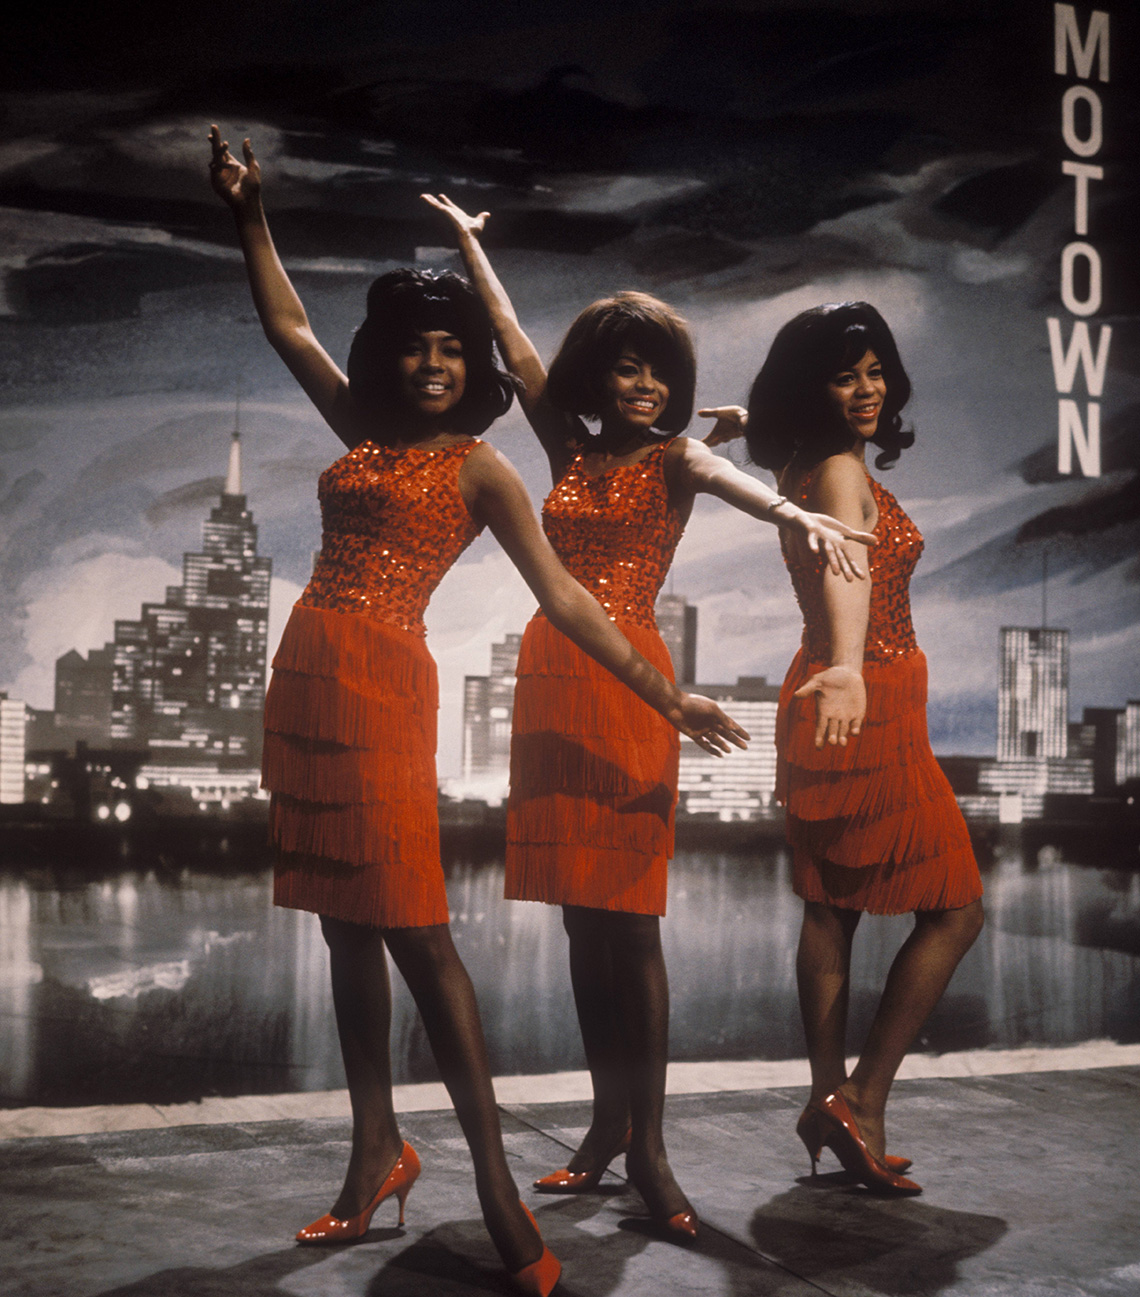 Presentación de la agrupación de Motown, The Supremes 